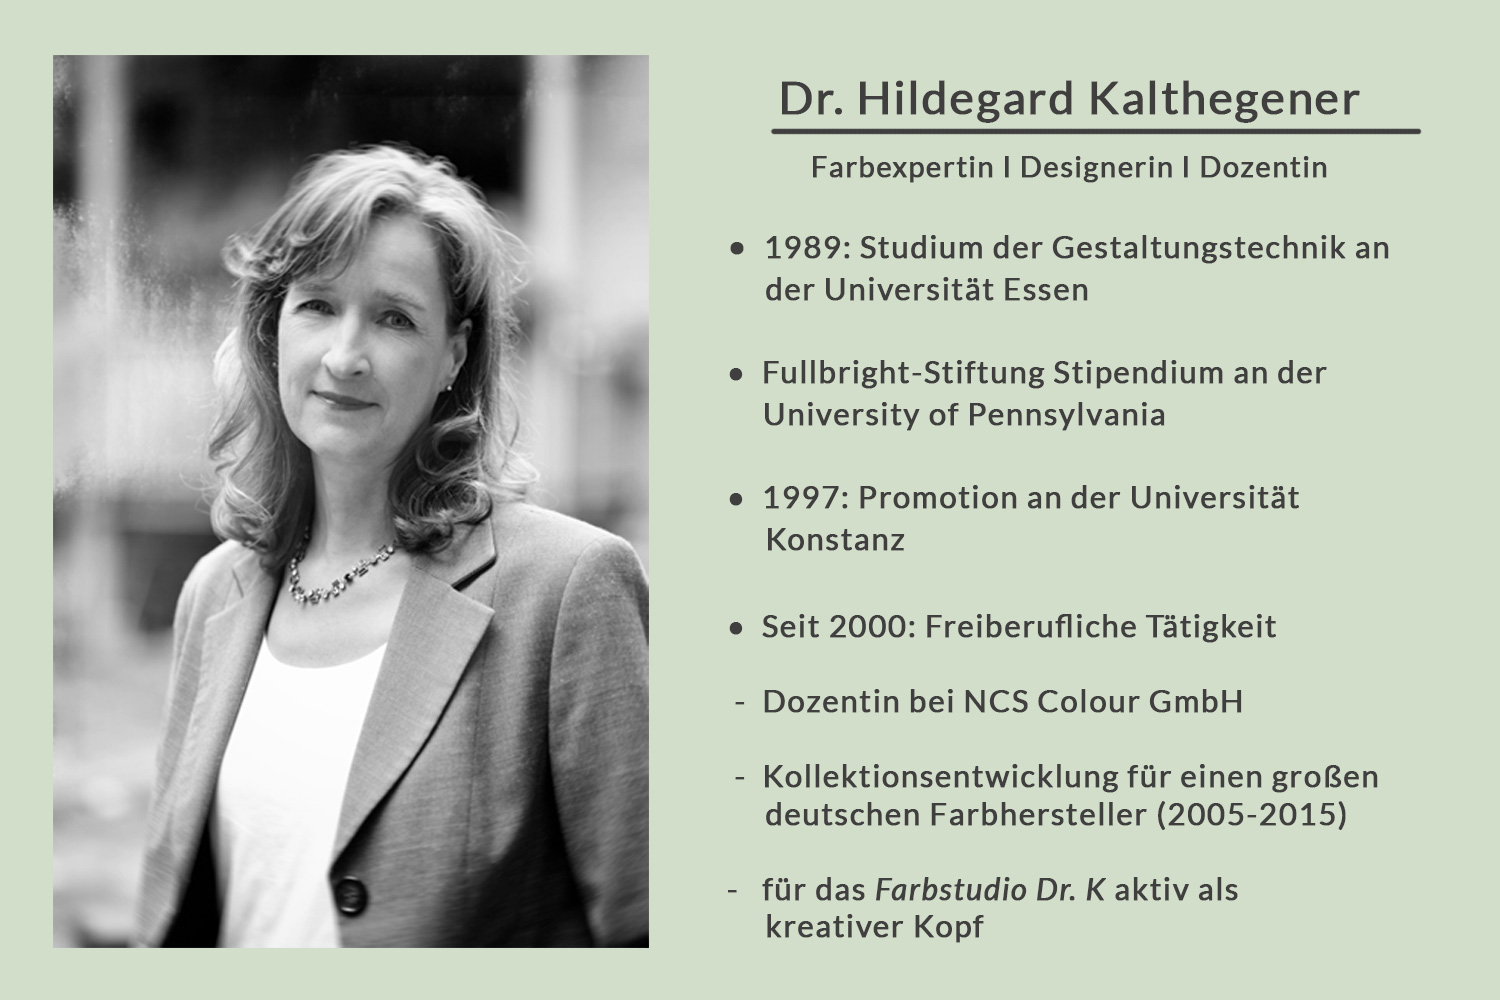 Lebenslauf Dr Hildegard Kalthegener Farbexpertin und Dozentin